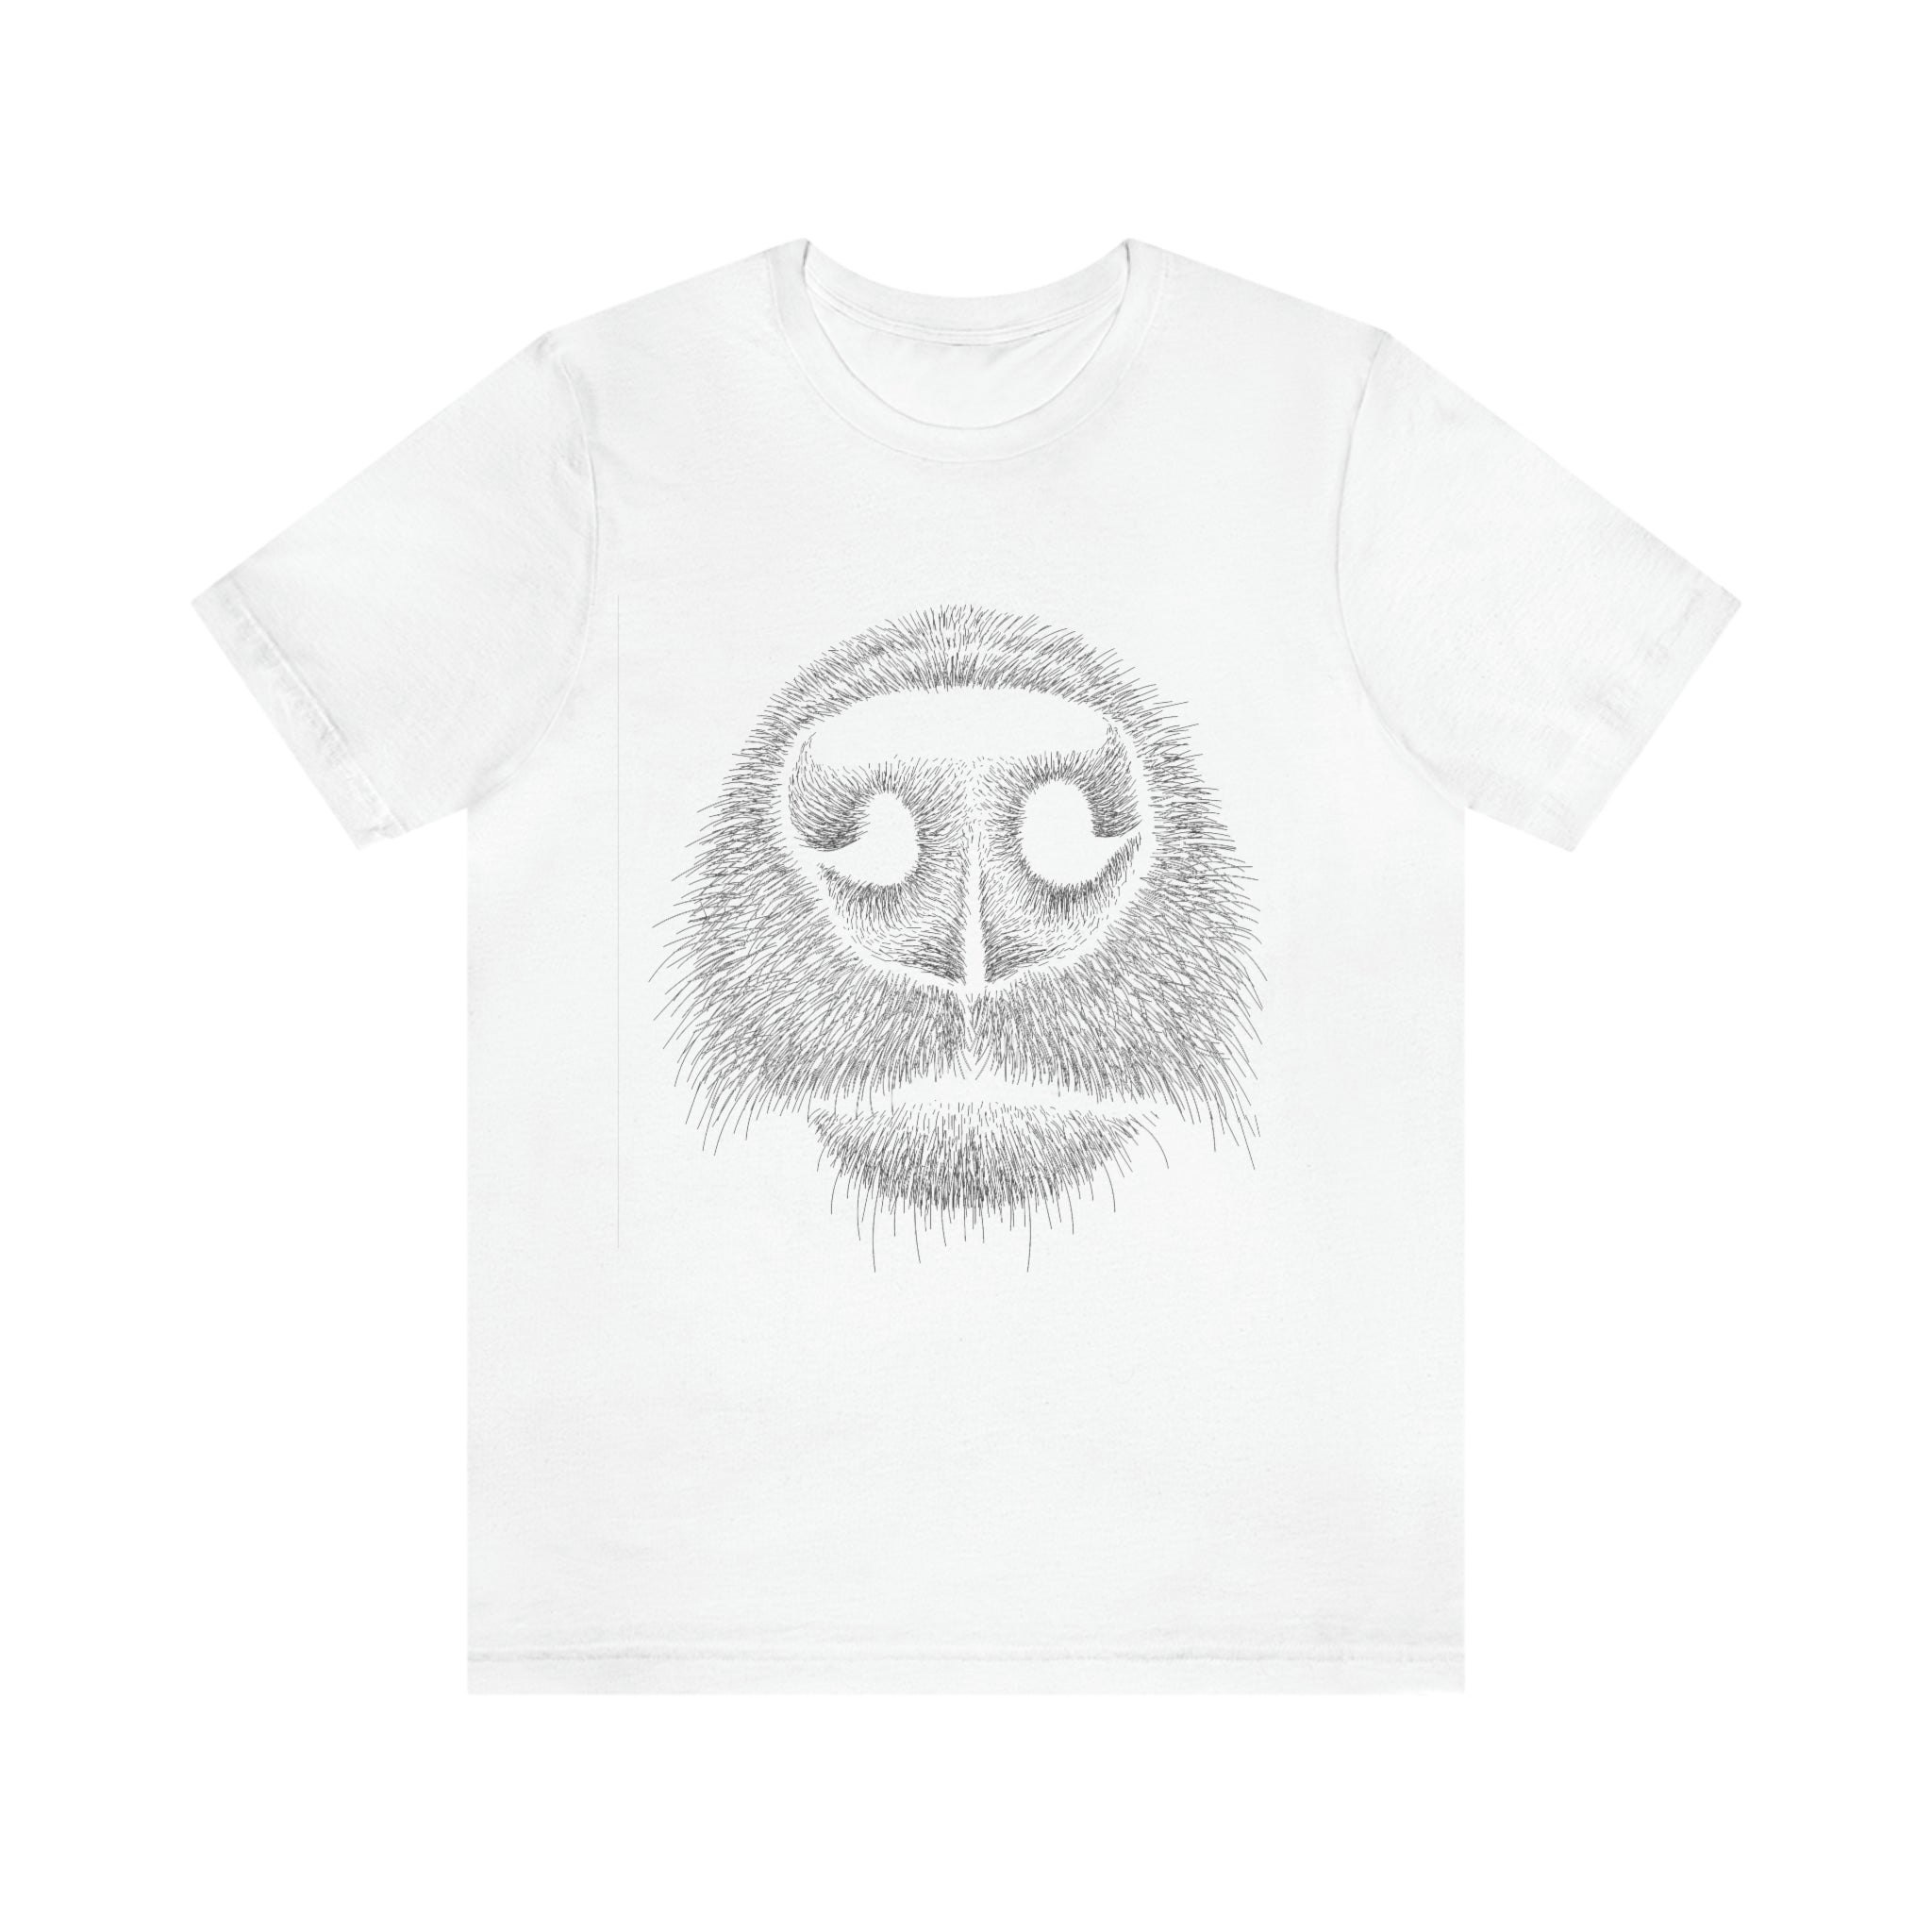 Boop! : Unisex 100% Cotton T-Shirt